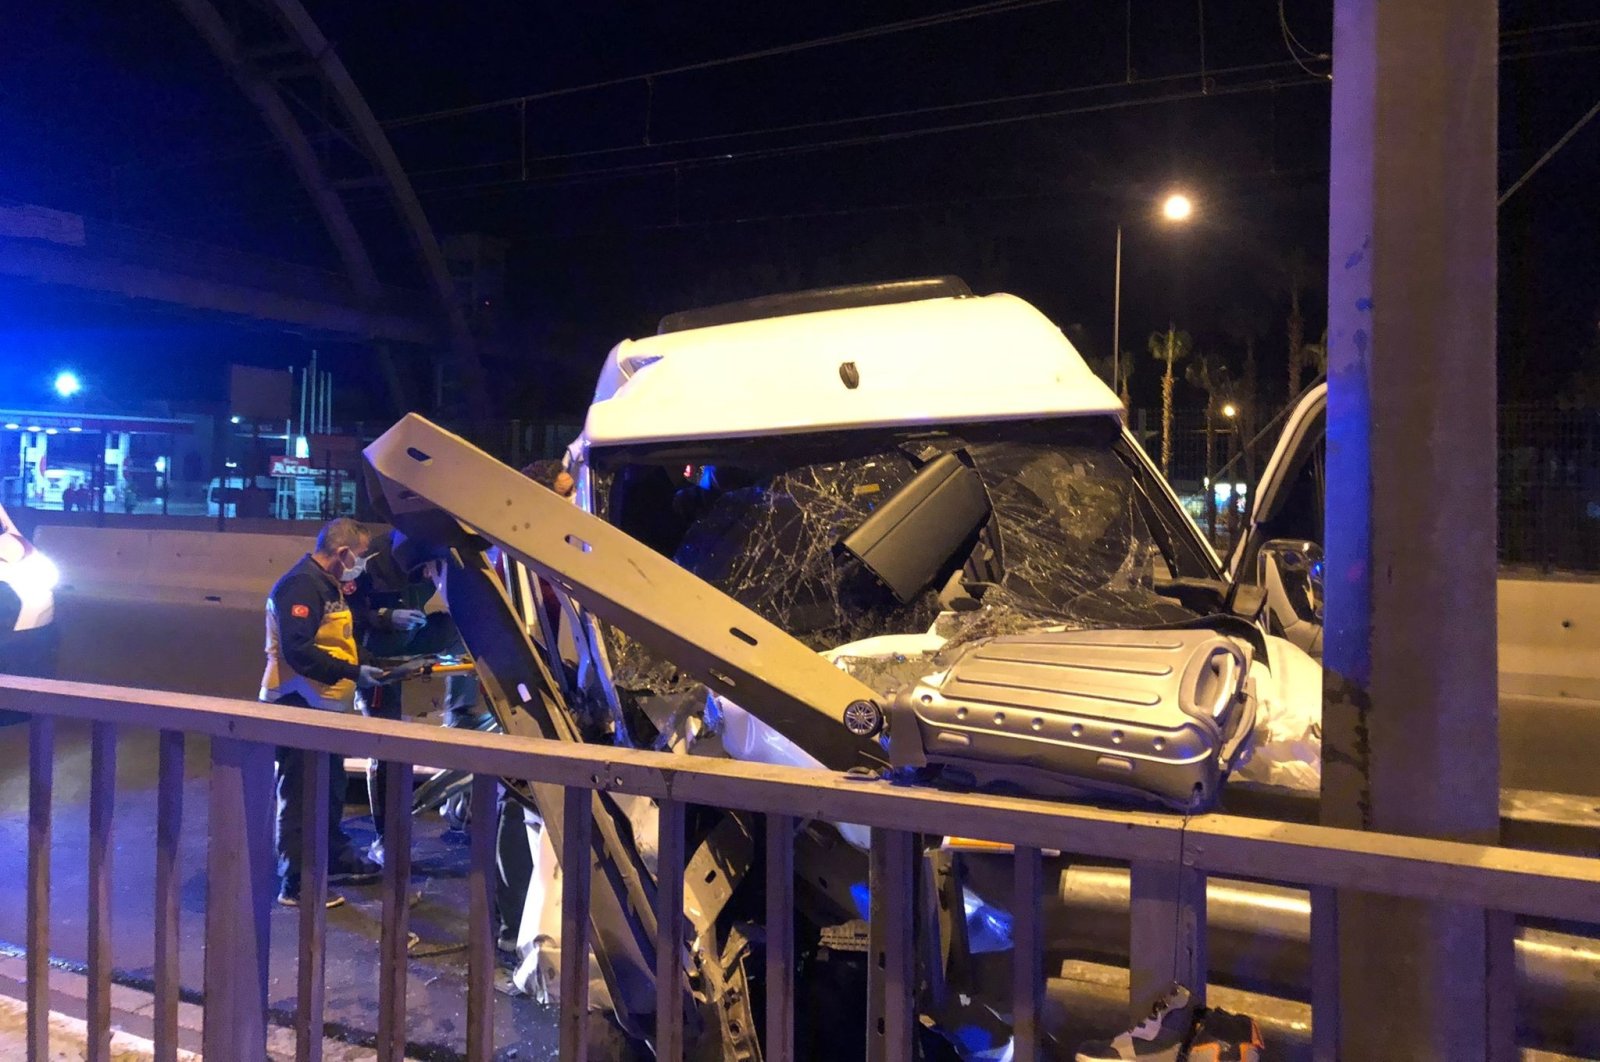 The minibus is seen after the crash in Antalya's Aksu on Oct. 30, 2021 (IHA Photo)